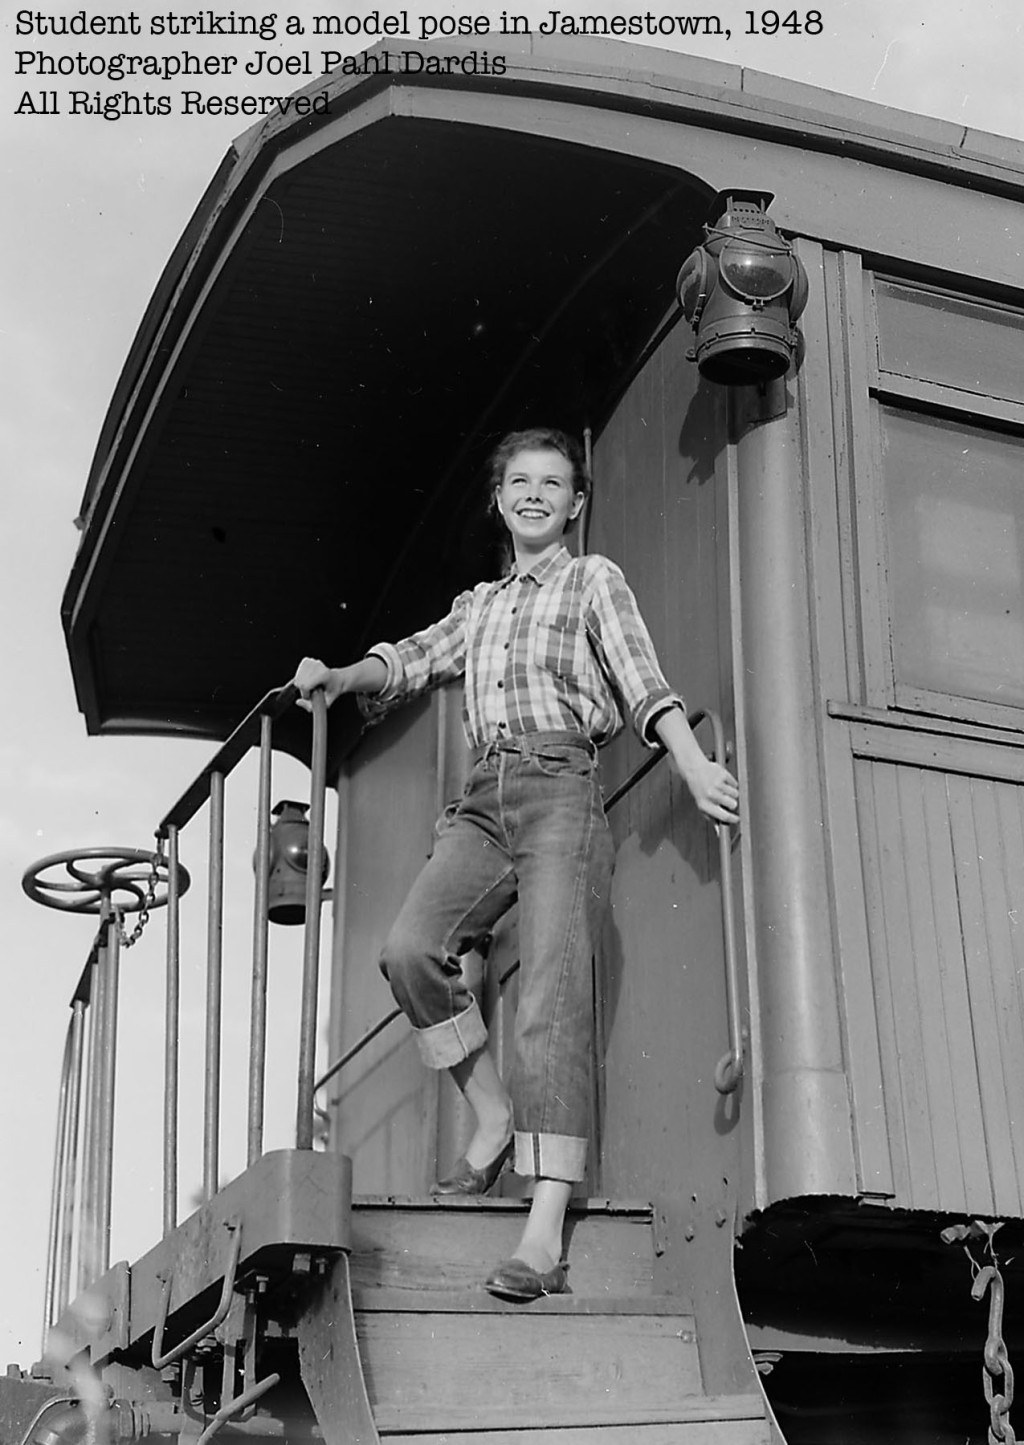 Sierra Railway, Box 61, 1948